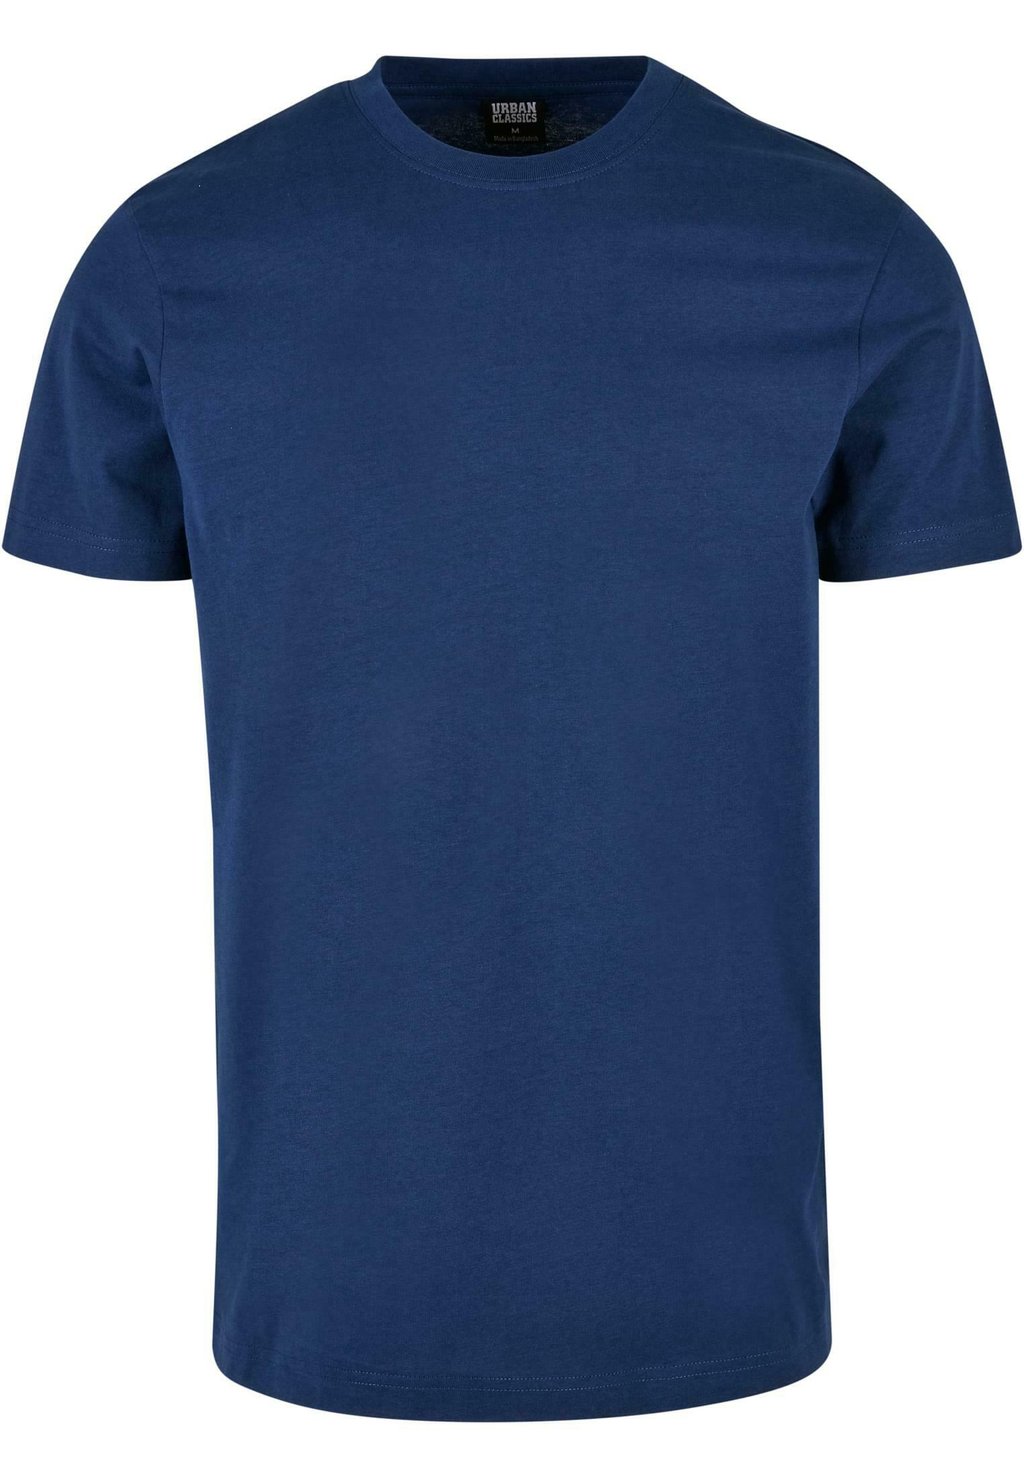 Базовая футболка BASIC Urban Classics, космический синий